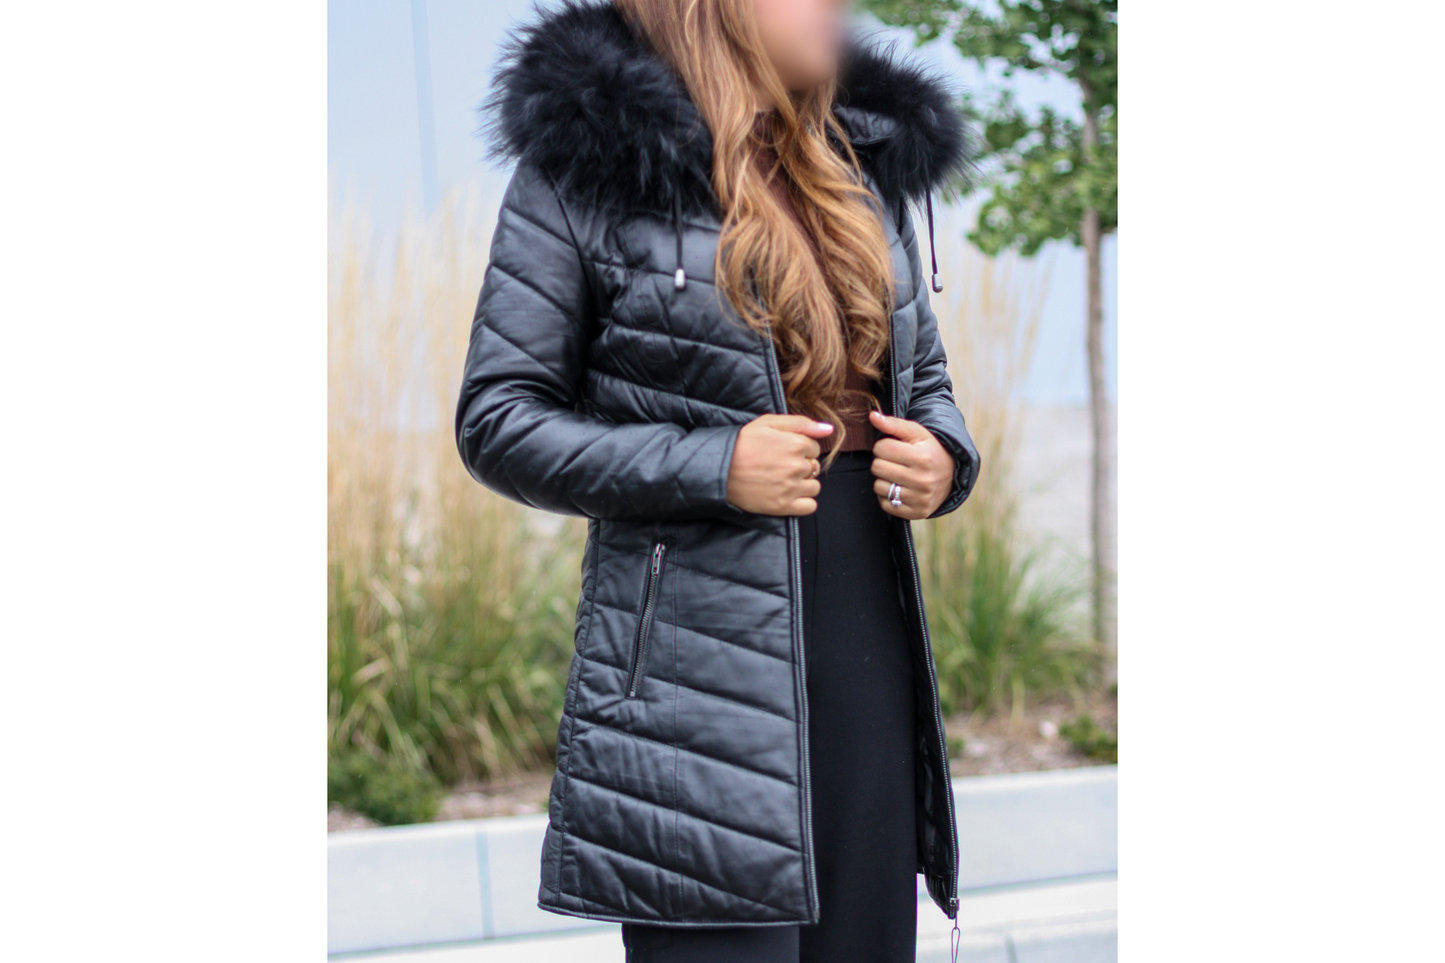 The Winter Puffer - black coat